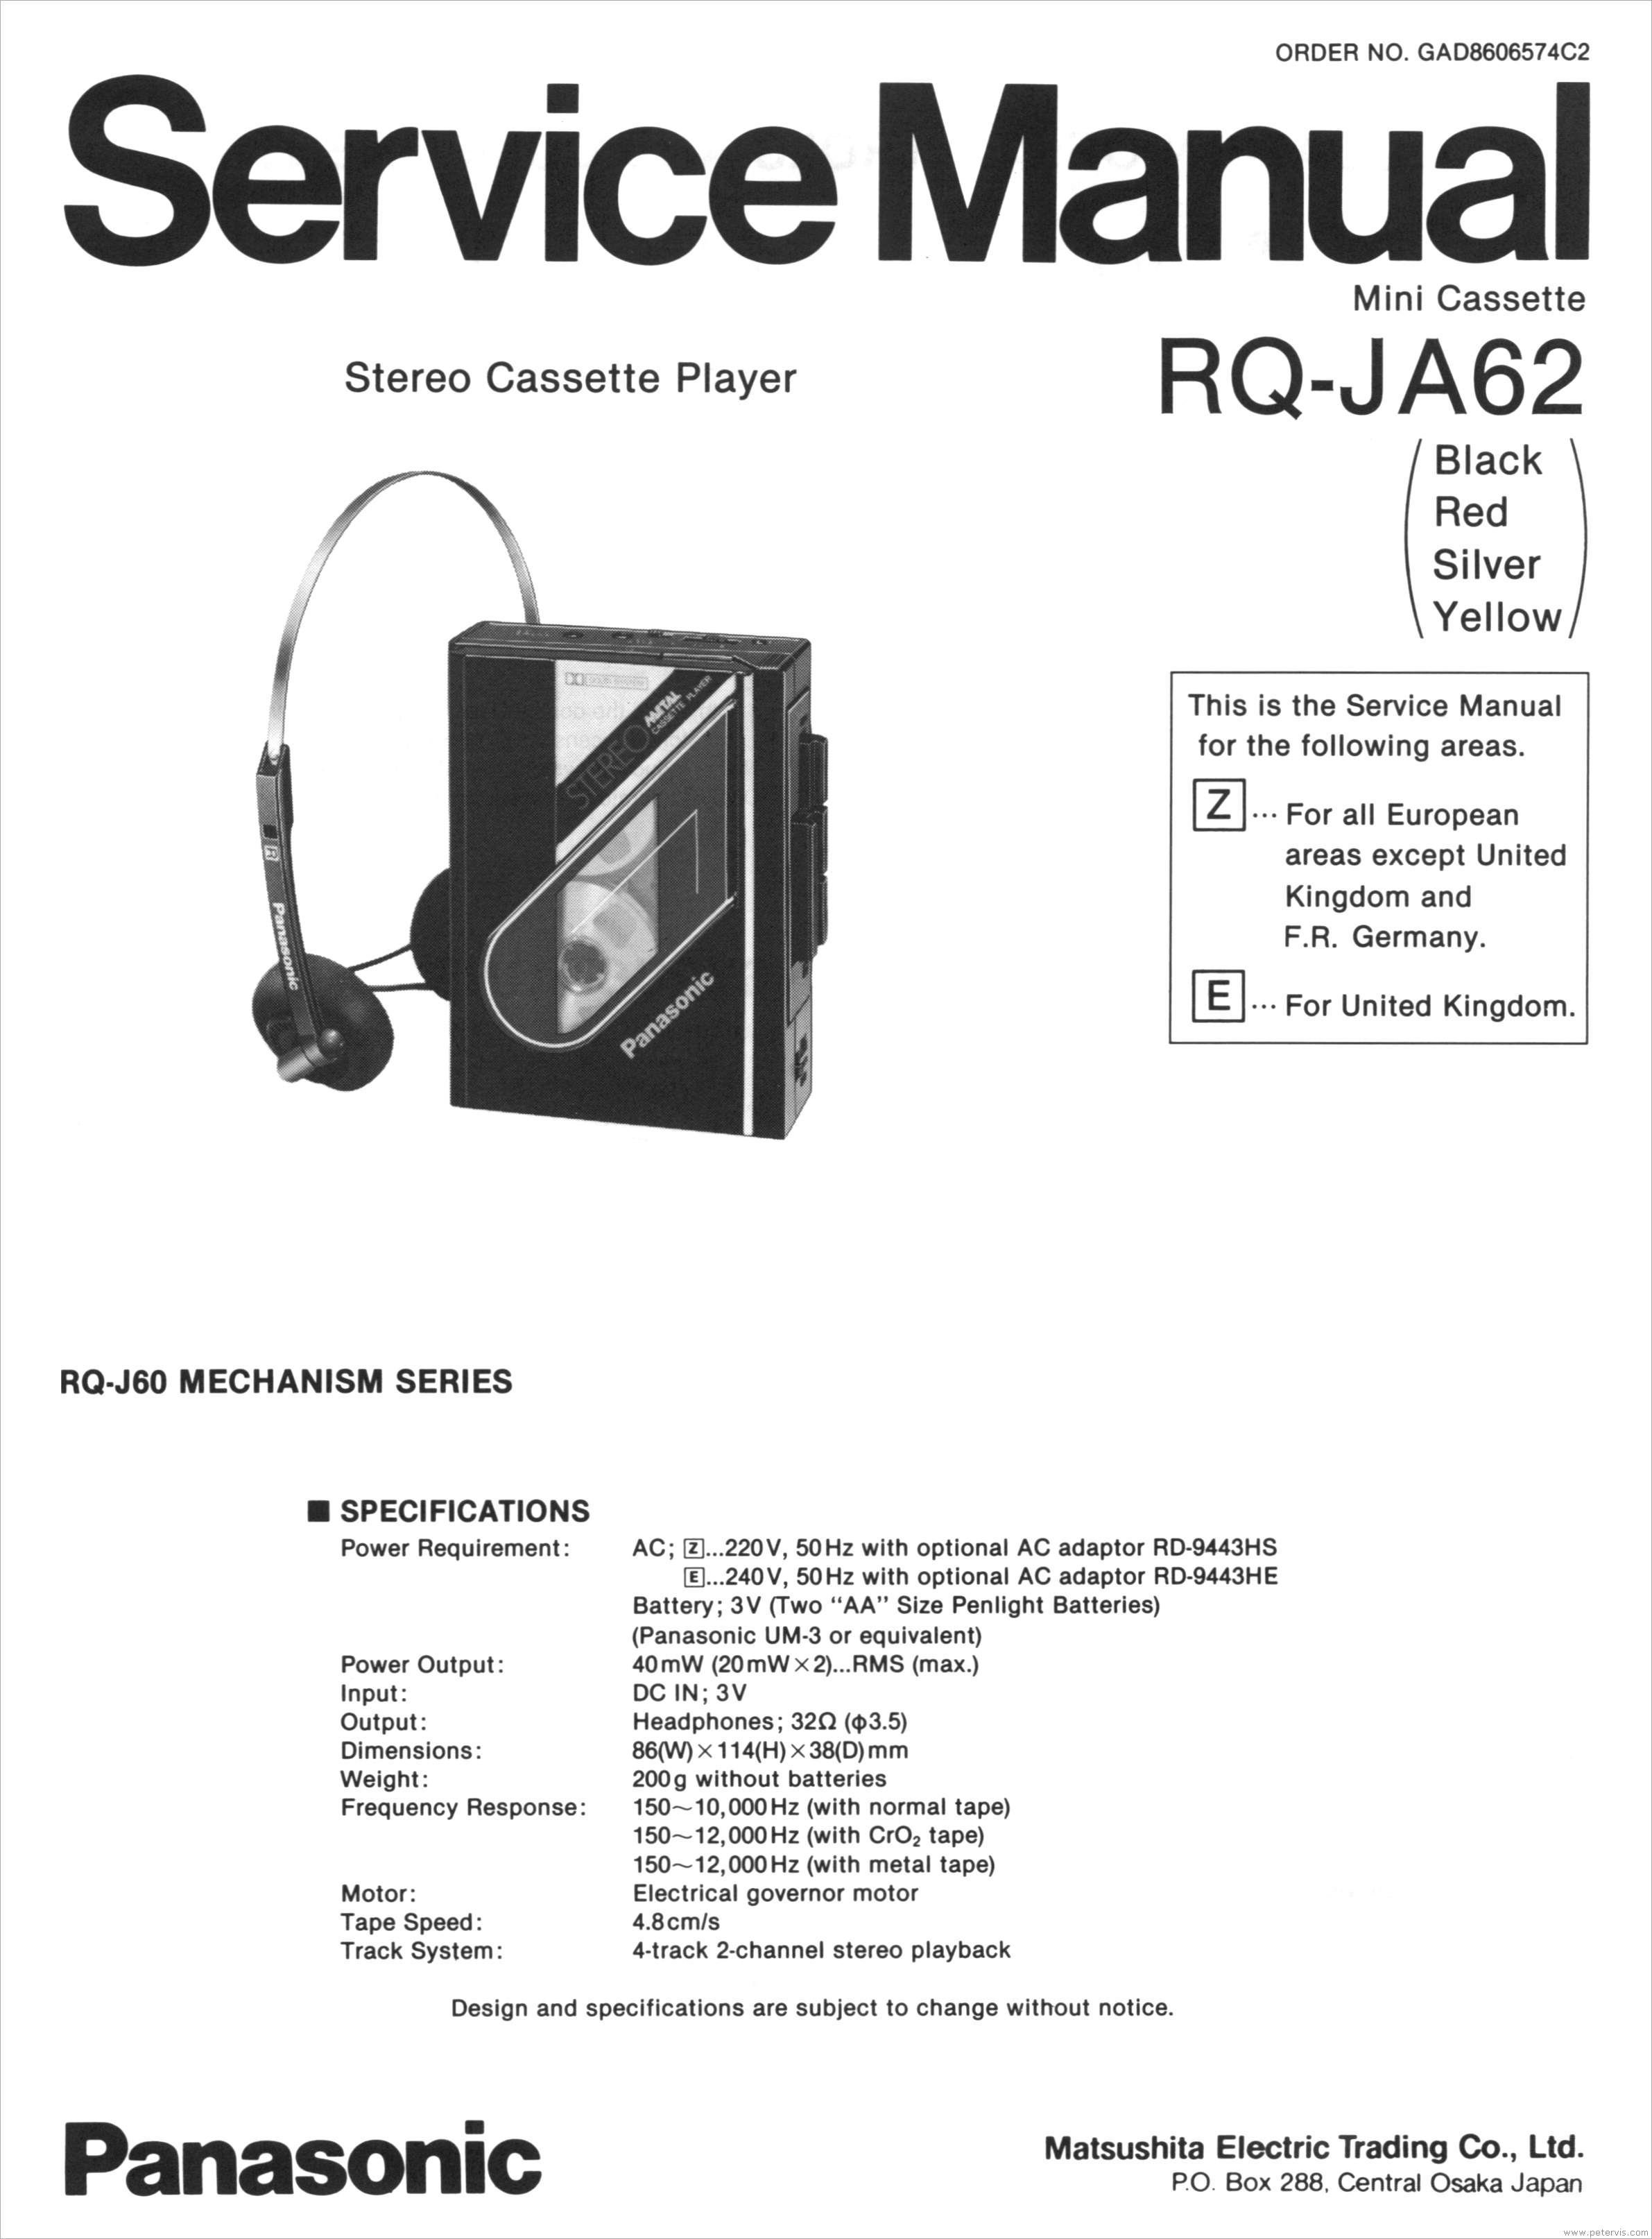 Panasonic RQ-JA62 Service Manual